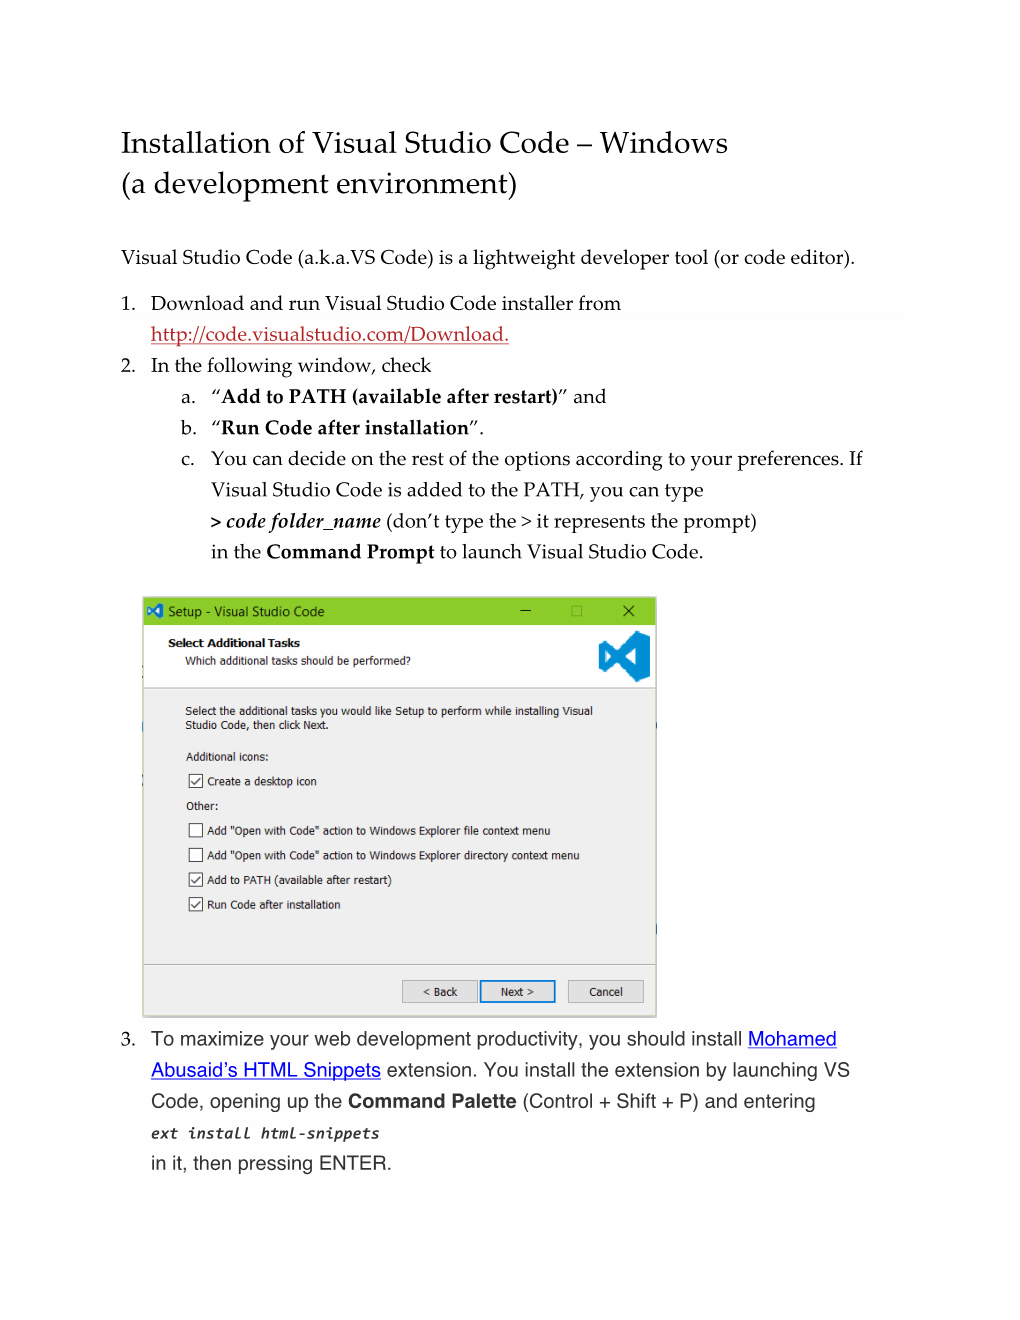 Installation of Visual Studio Code – Windows (A Development Environment)